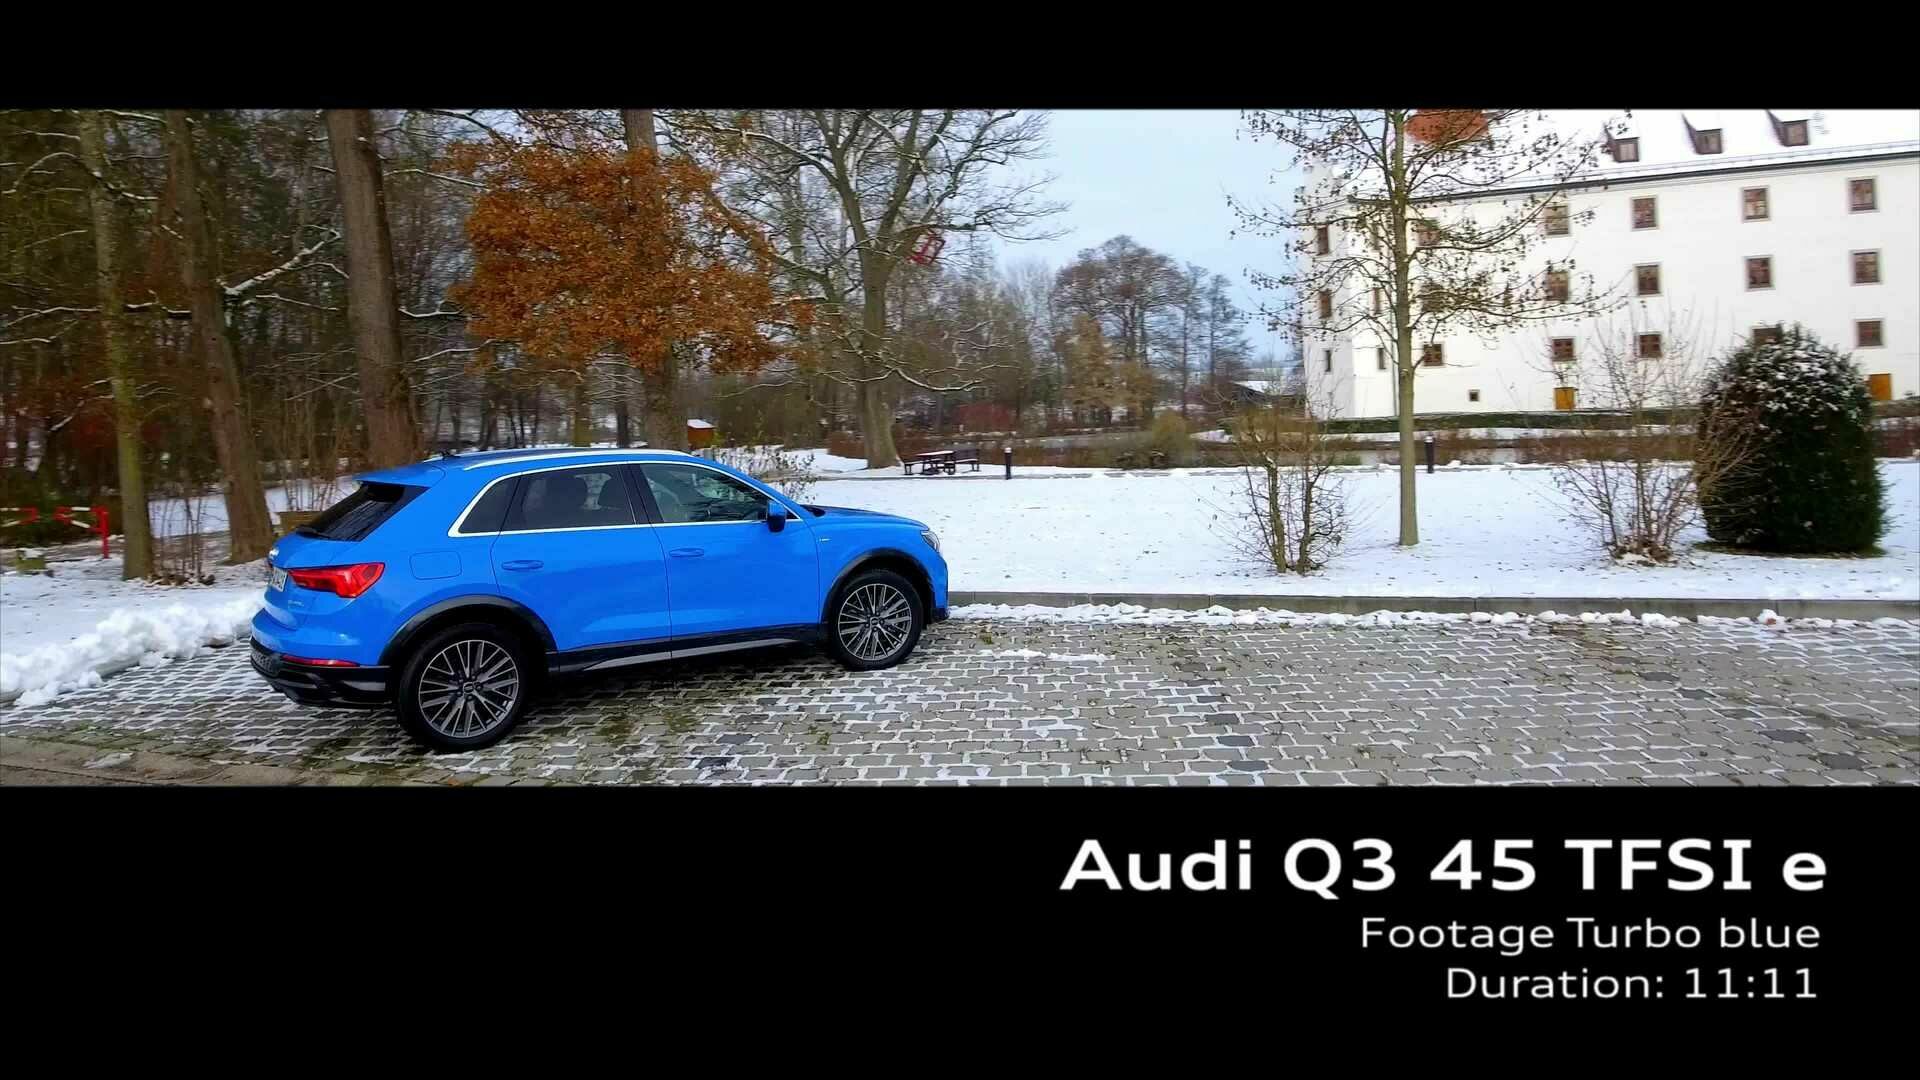 Footage: Audi Q3 TFSI e Turbo blue